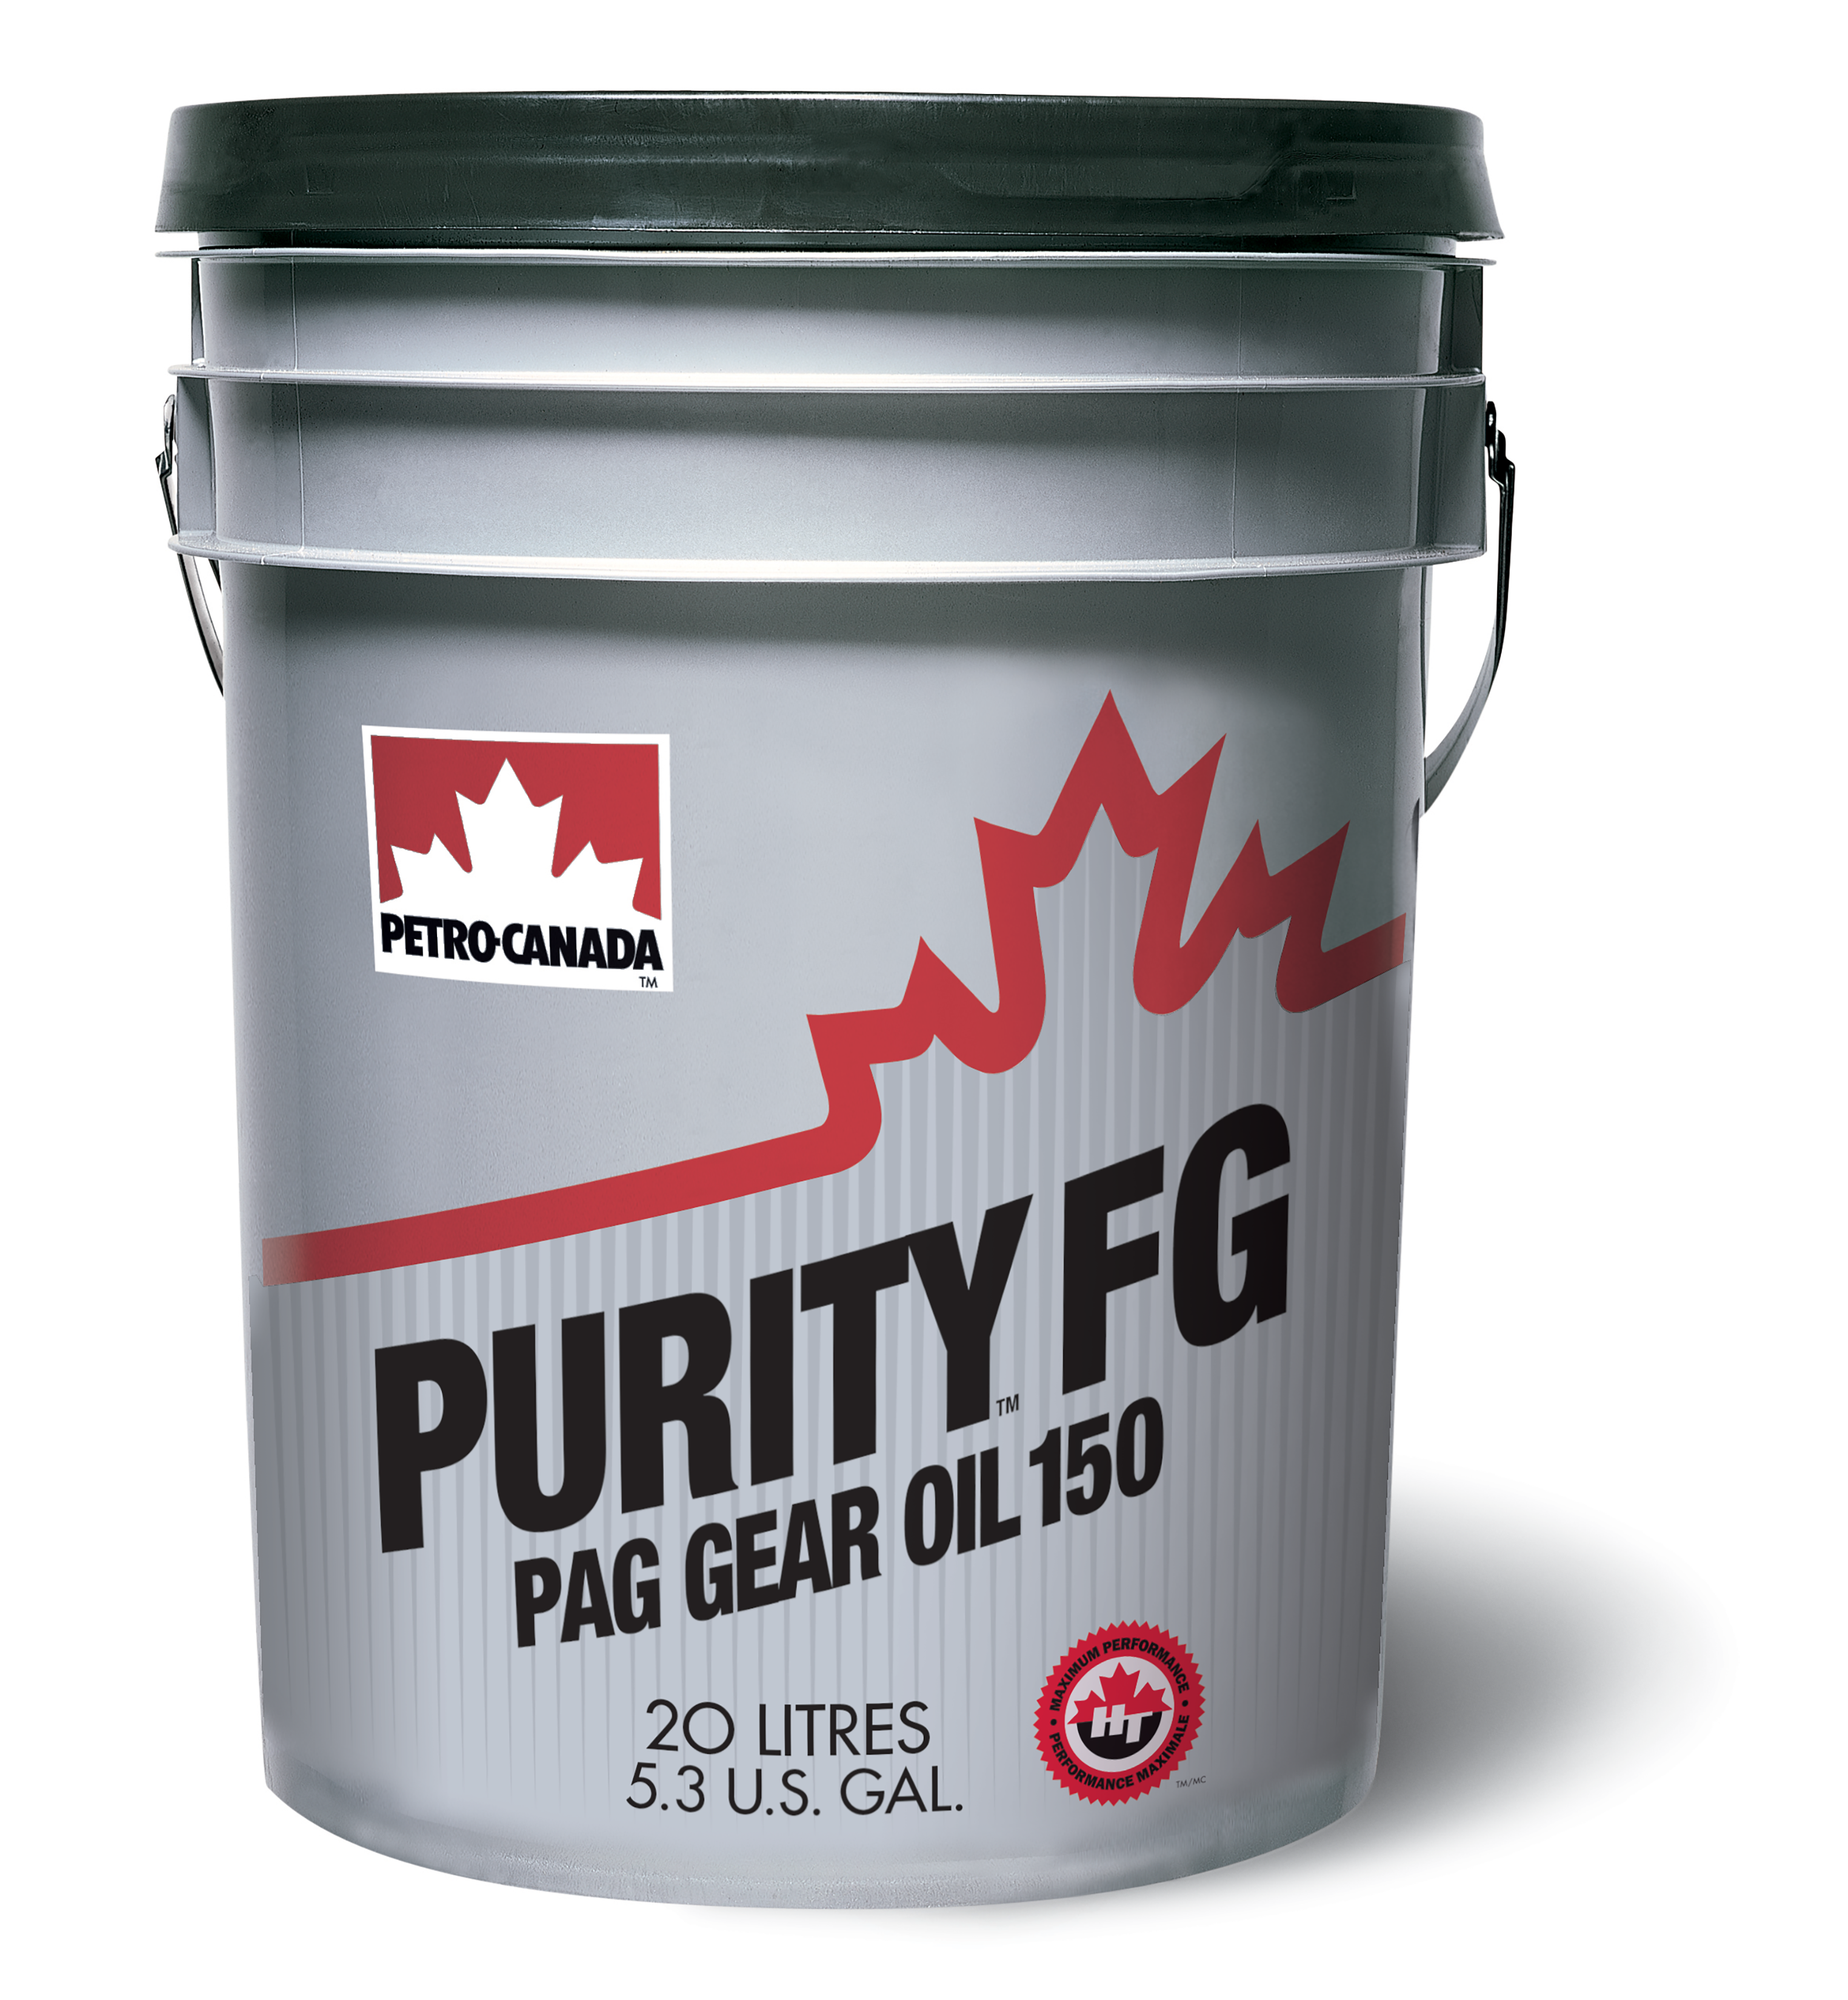 Petro-Canada Purity FG PAG Getriebeöl 150